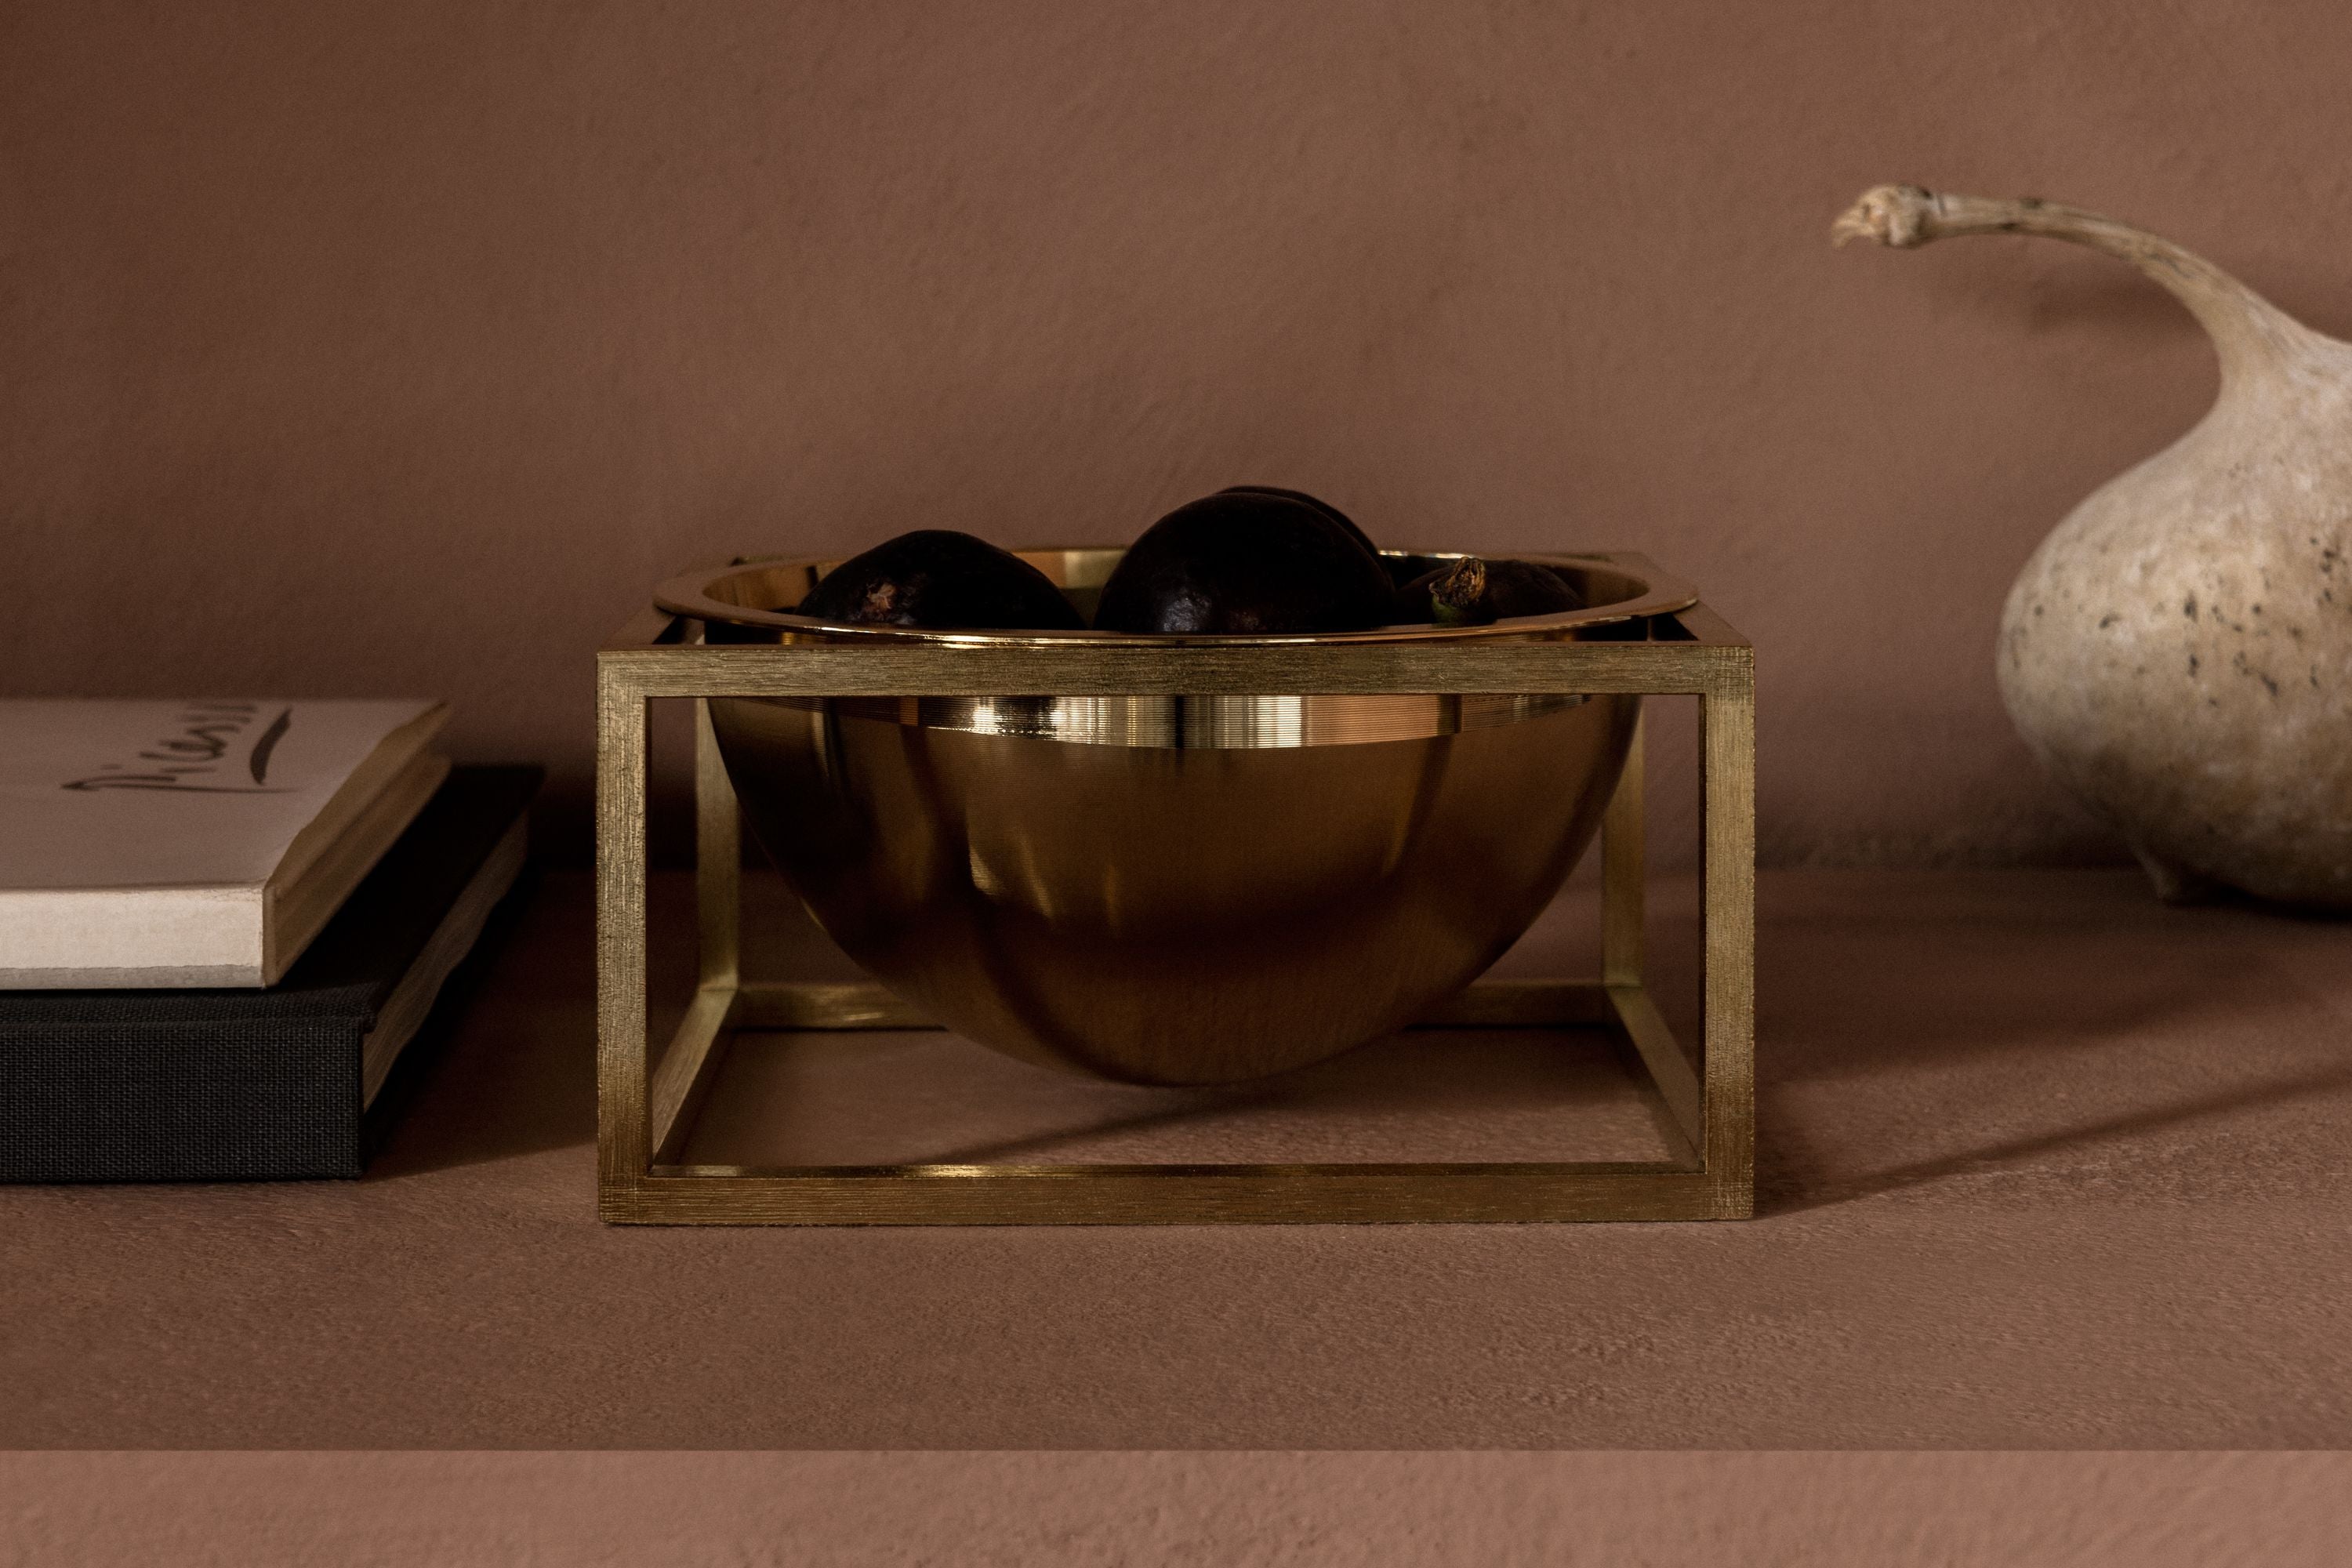 Audo Copenhagen Kubus Centerpiece Bowl Brass, 14cm